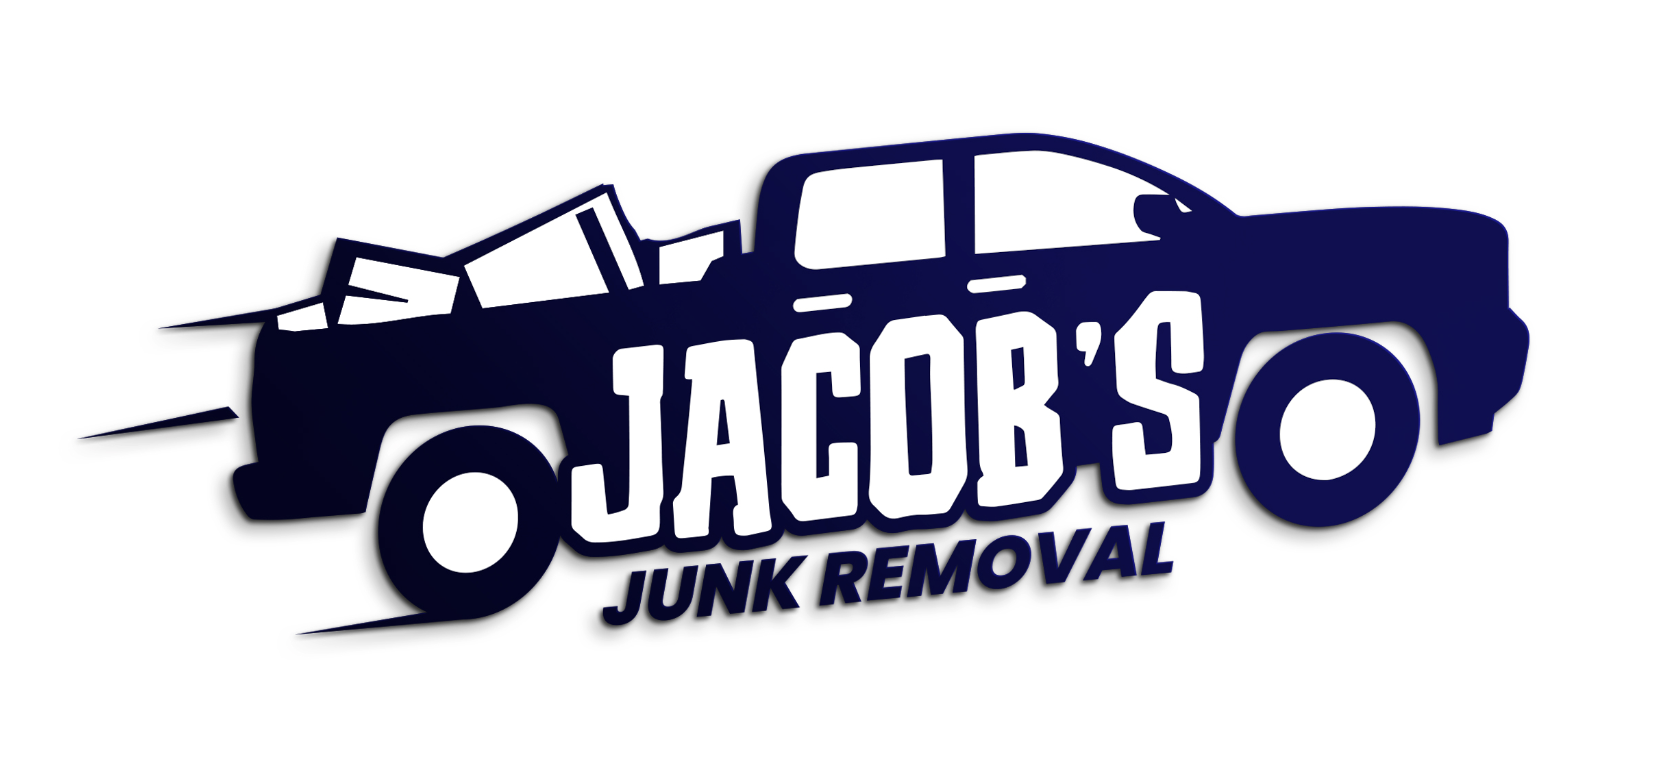 Jacob's Junk Removal